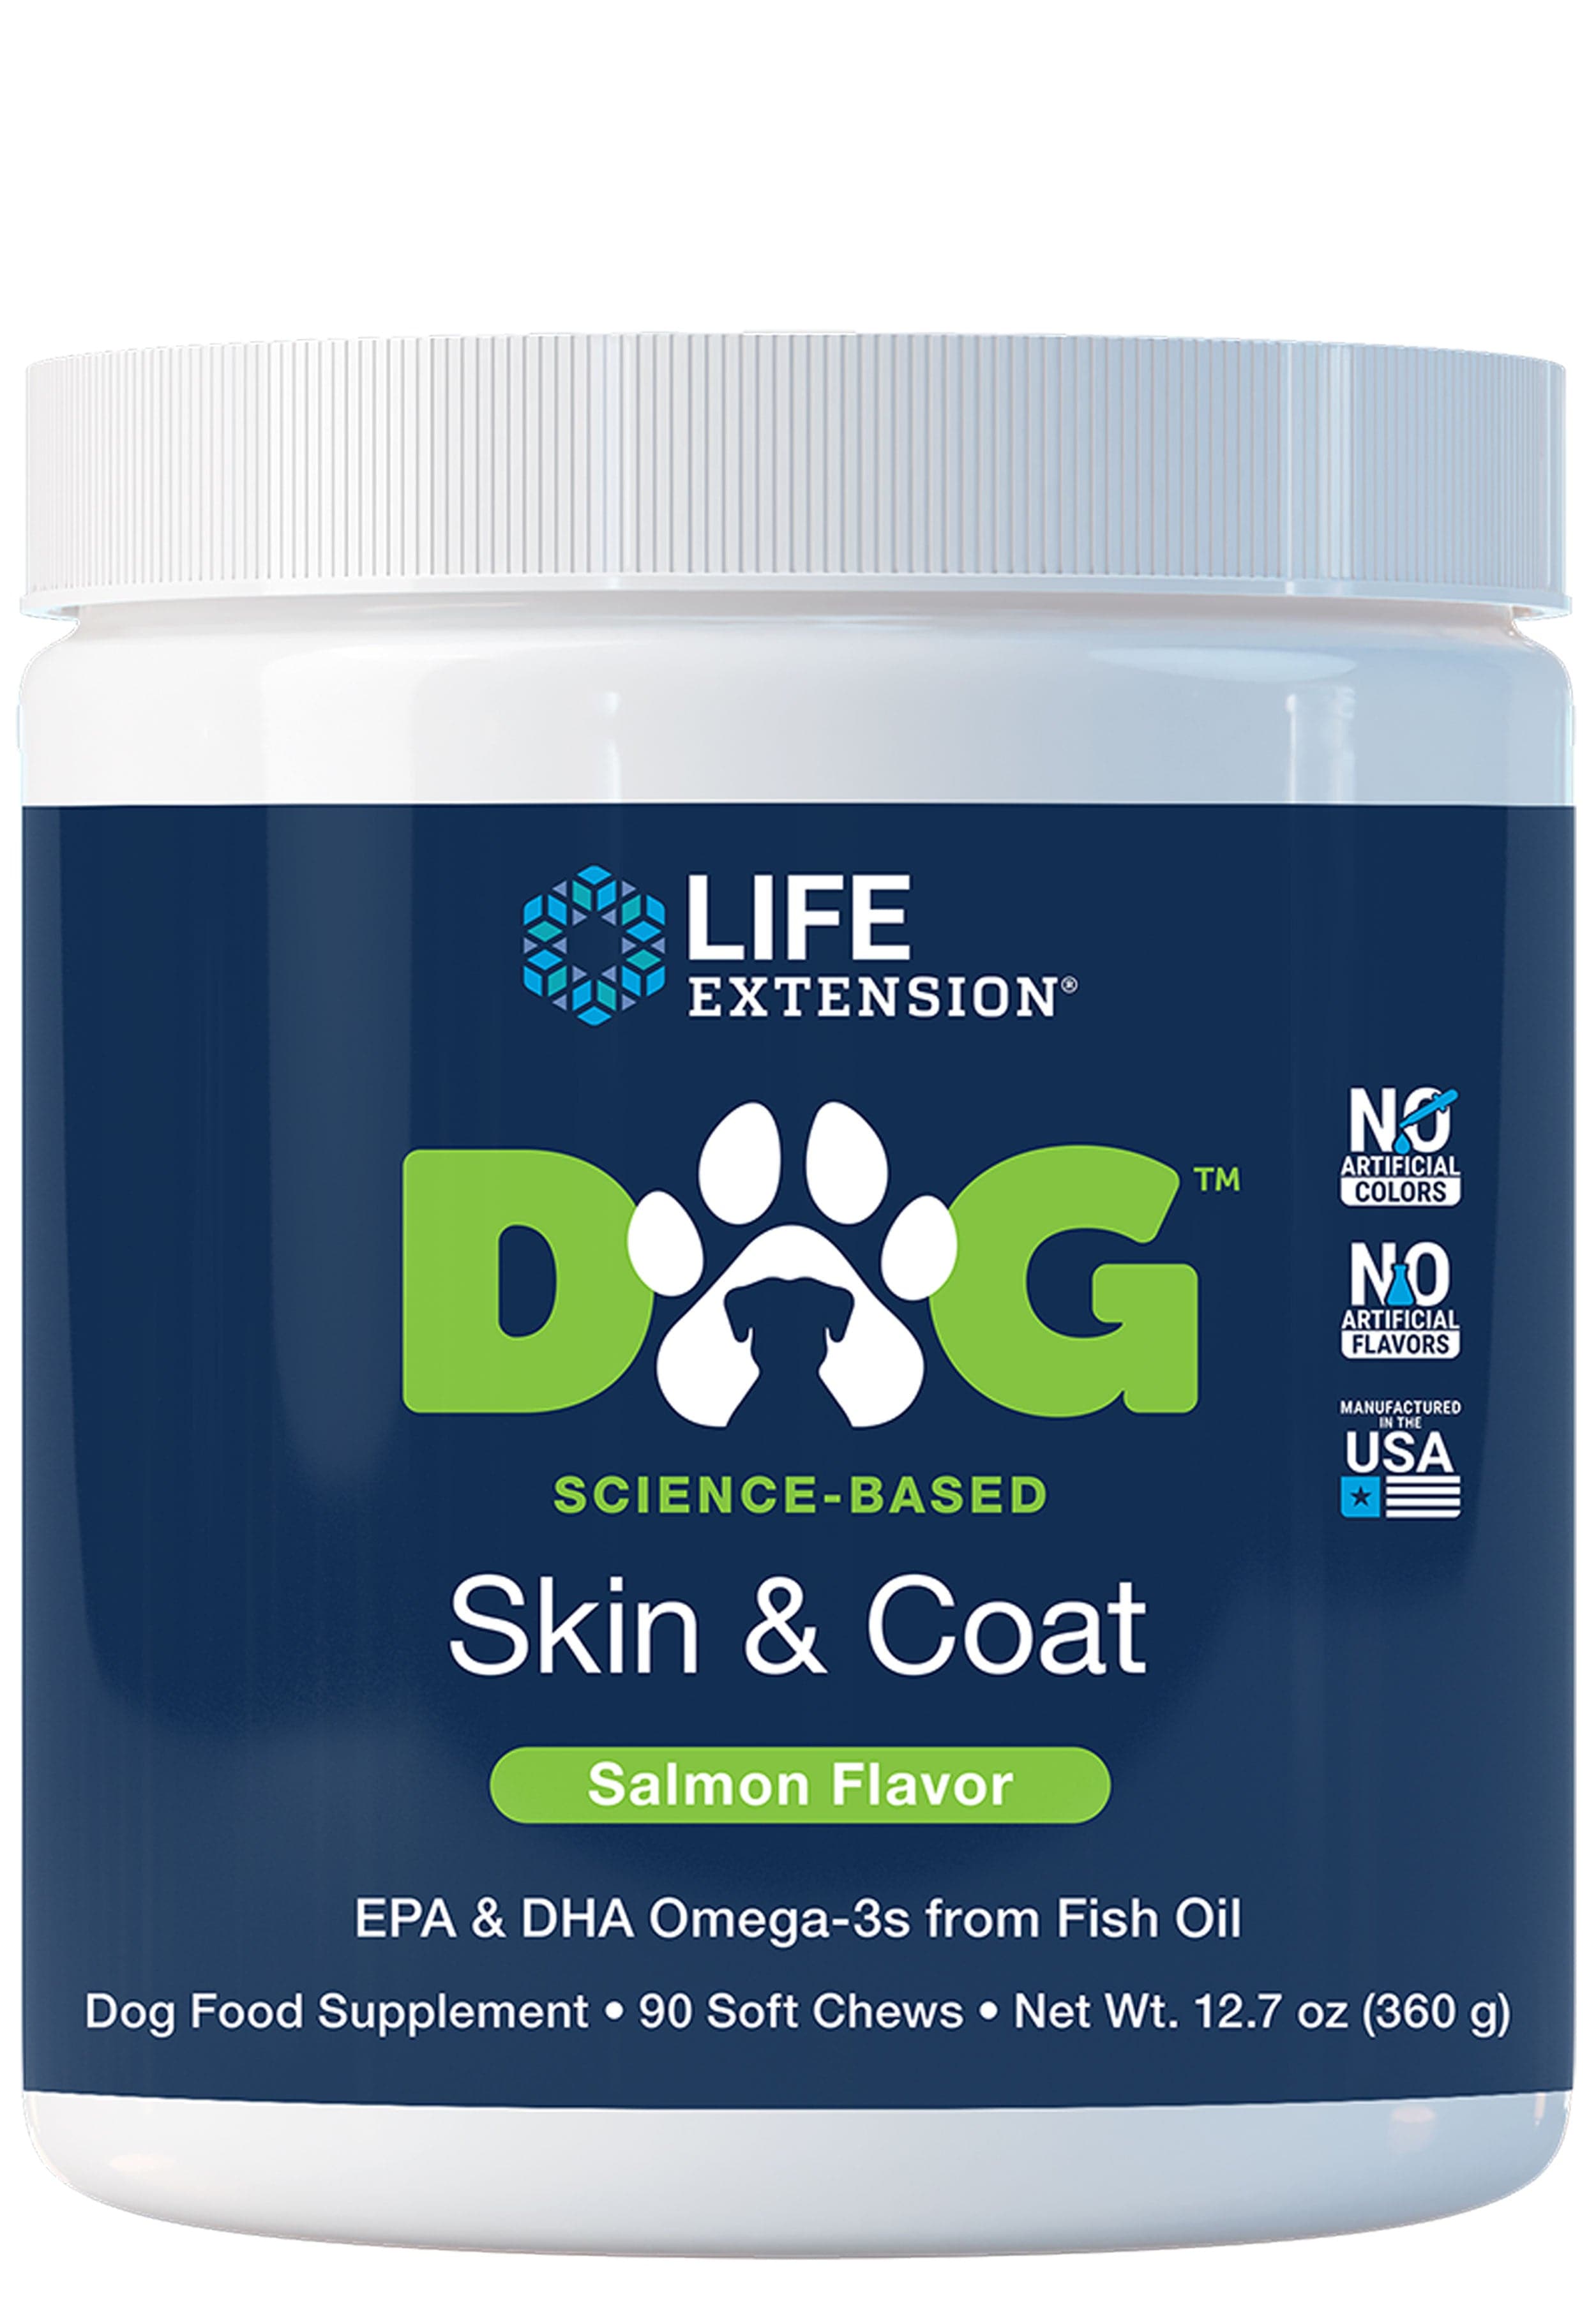 Life Extension DOG Skin & Coat